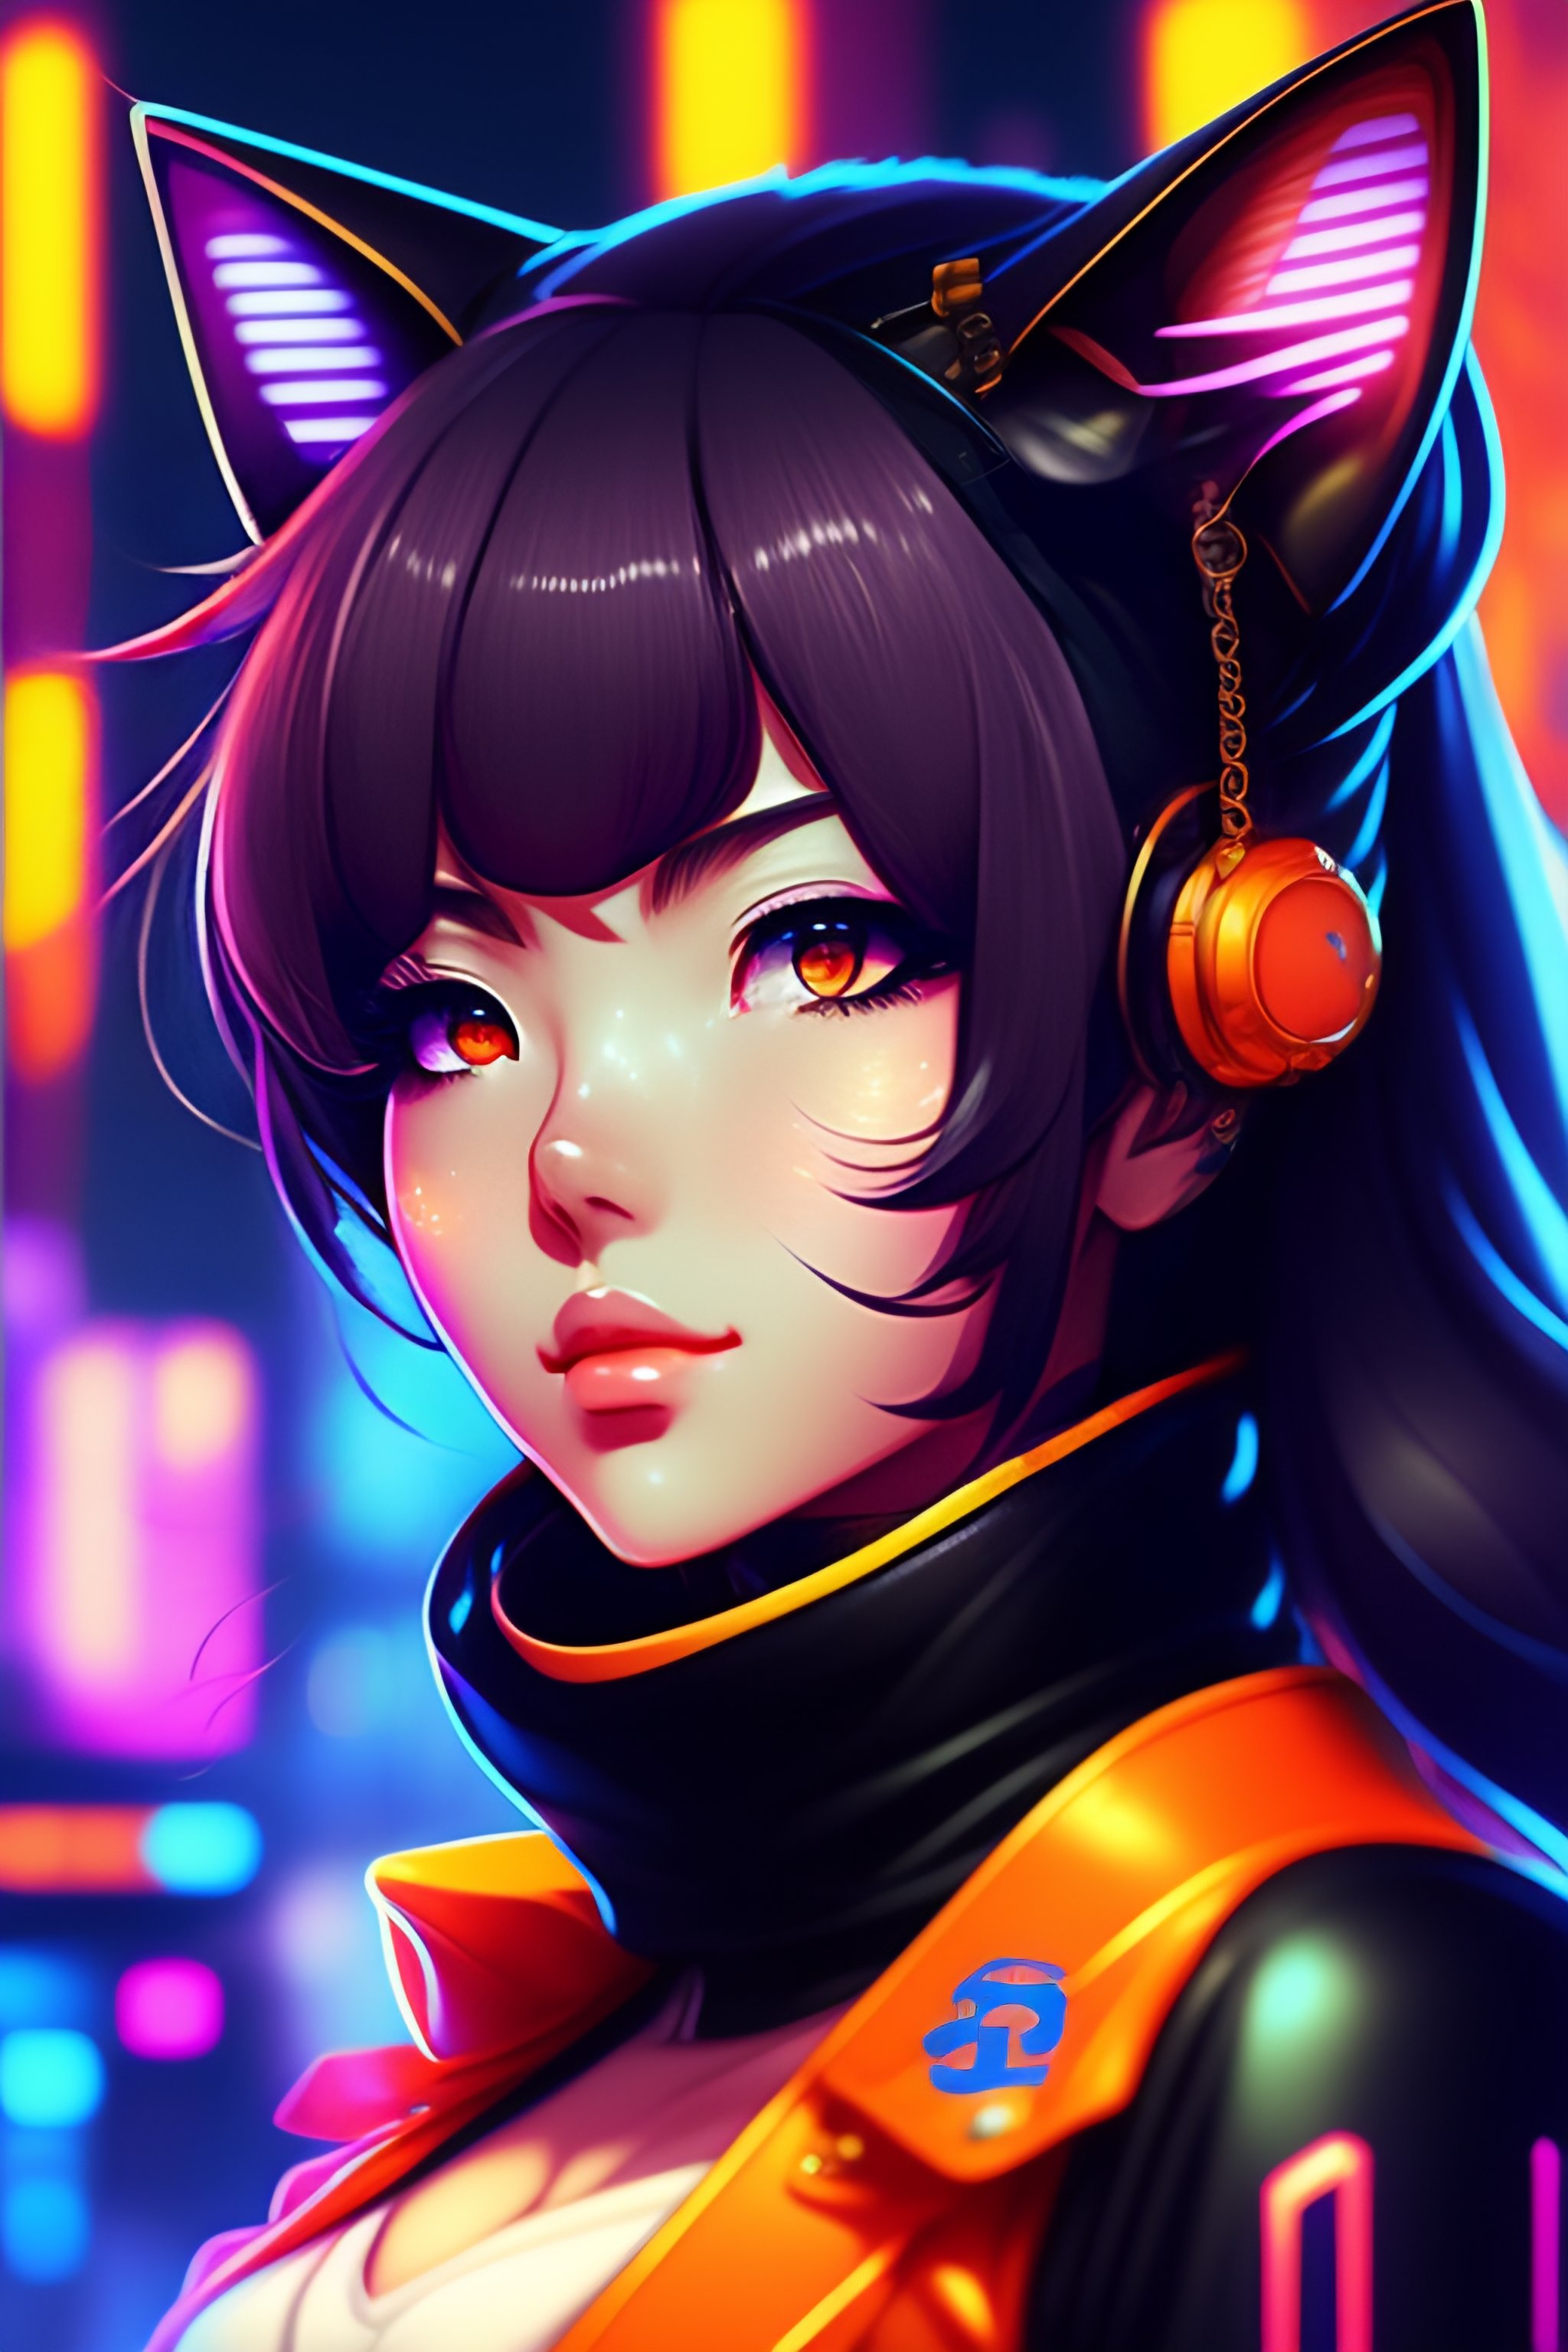 Lexica - Portrait of a Cute Anime Cyber Ninja Cat Girl in a Retro ...